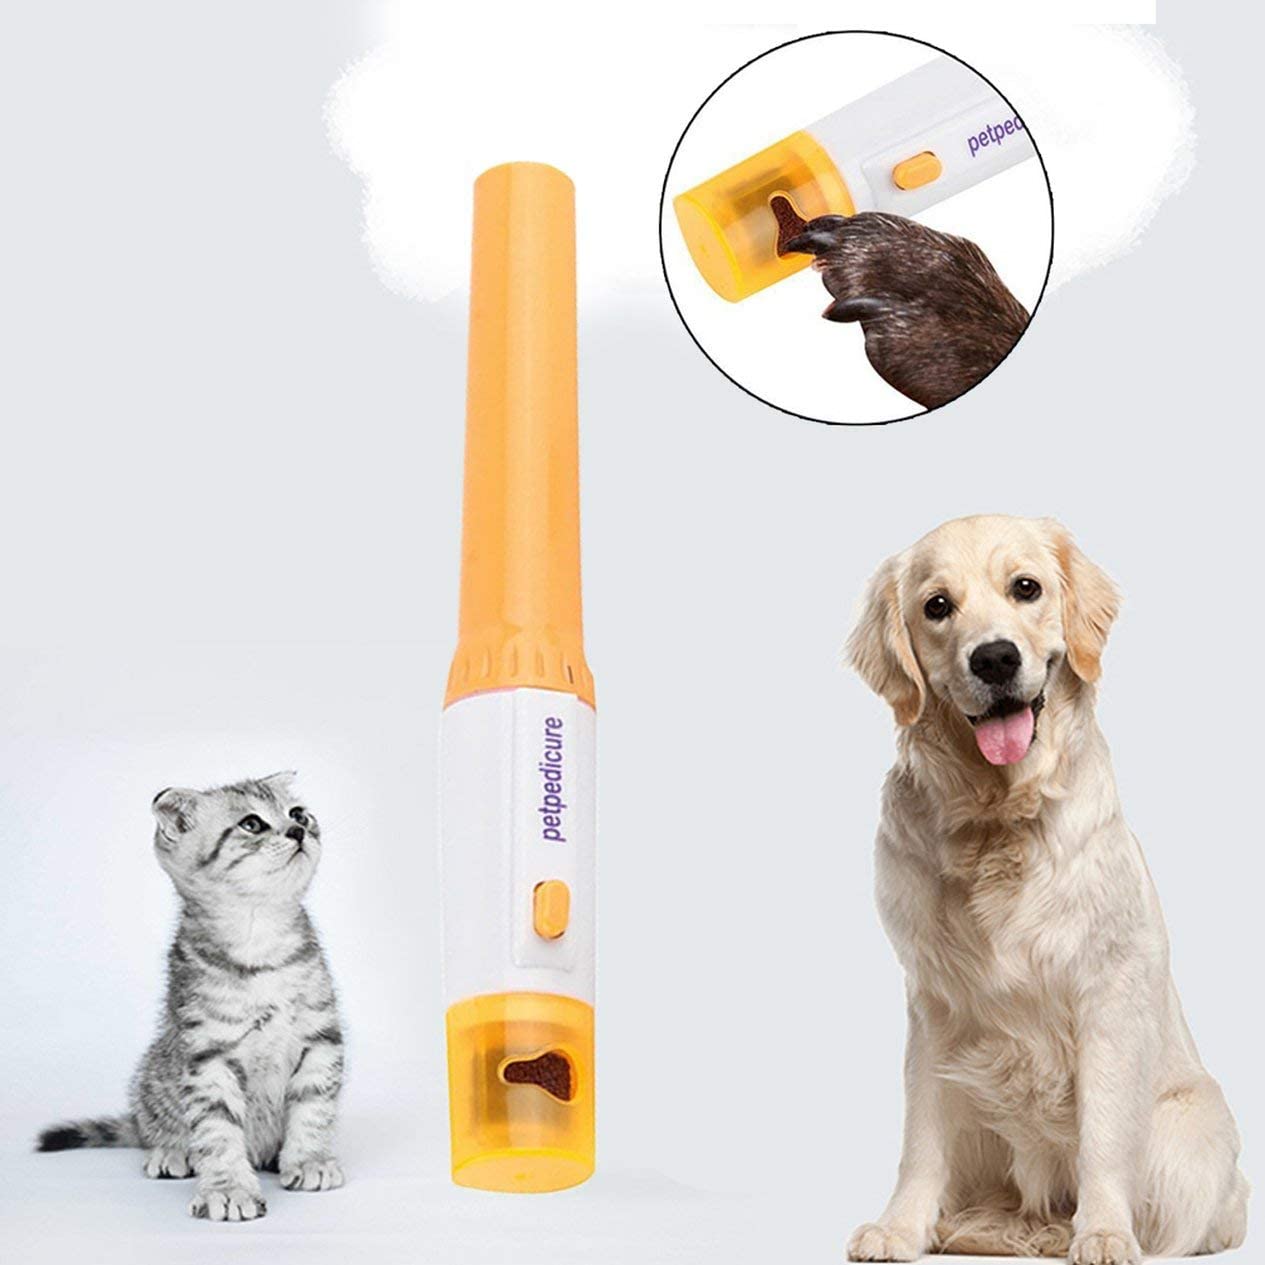  Tijeras eléctricas Kit de Lima de uñas Manicura para Mascotas Perro Gato Clipper Trimmer Grinder Pet Nail Grooming Grinder-Orange (BCVBFGCXVB) 